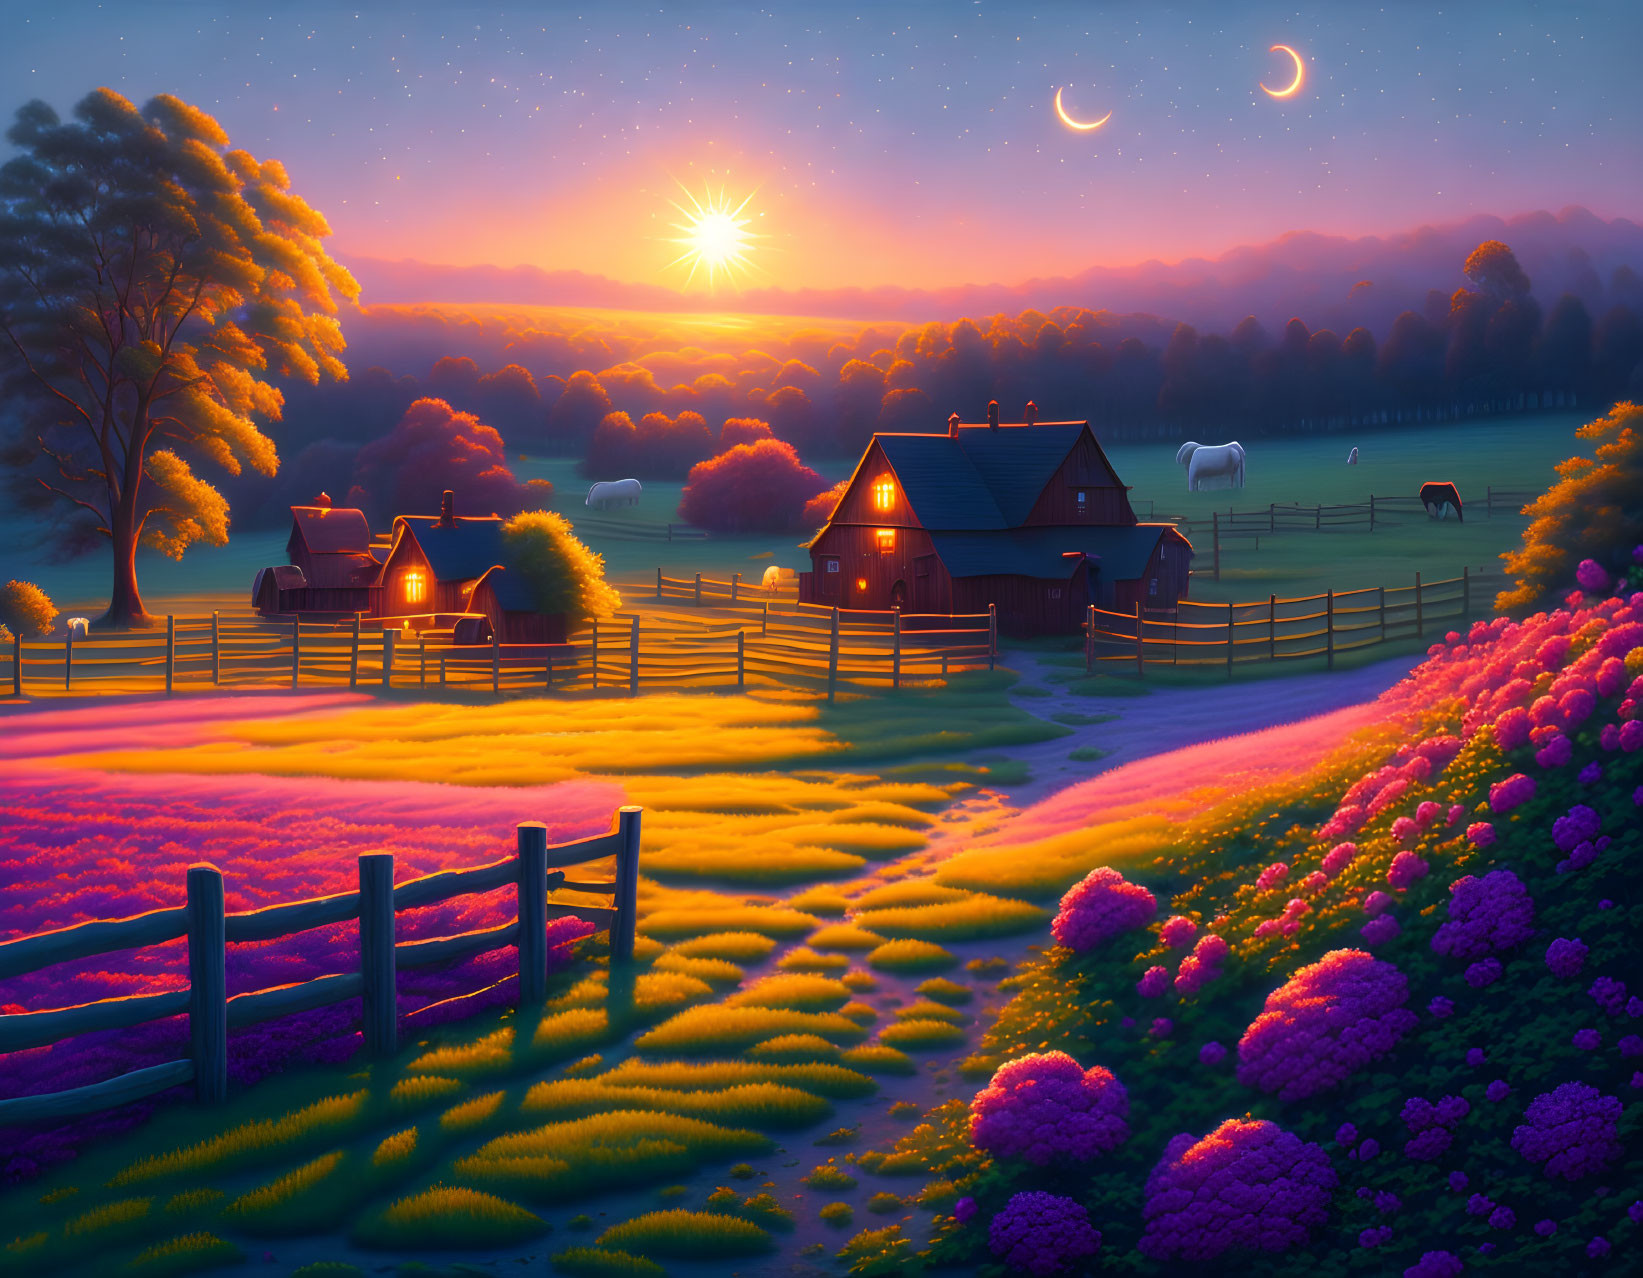 Twilight farm scene: purple flowers, cozy cottages, grazing horses